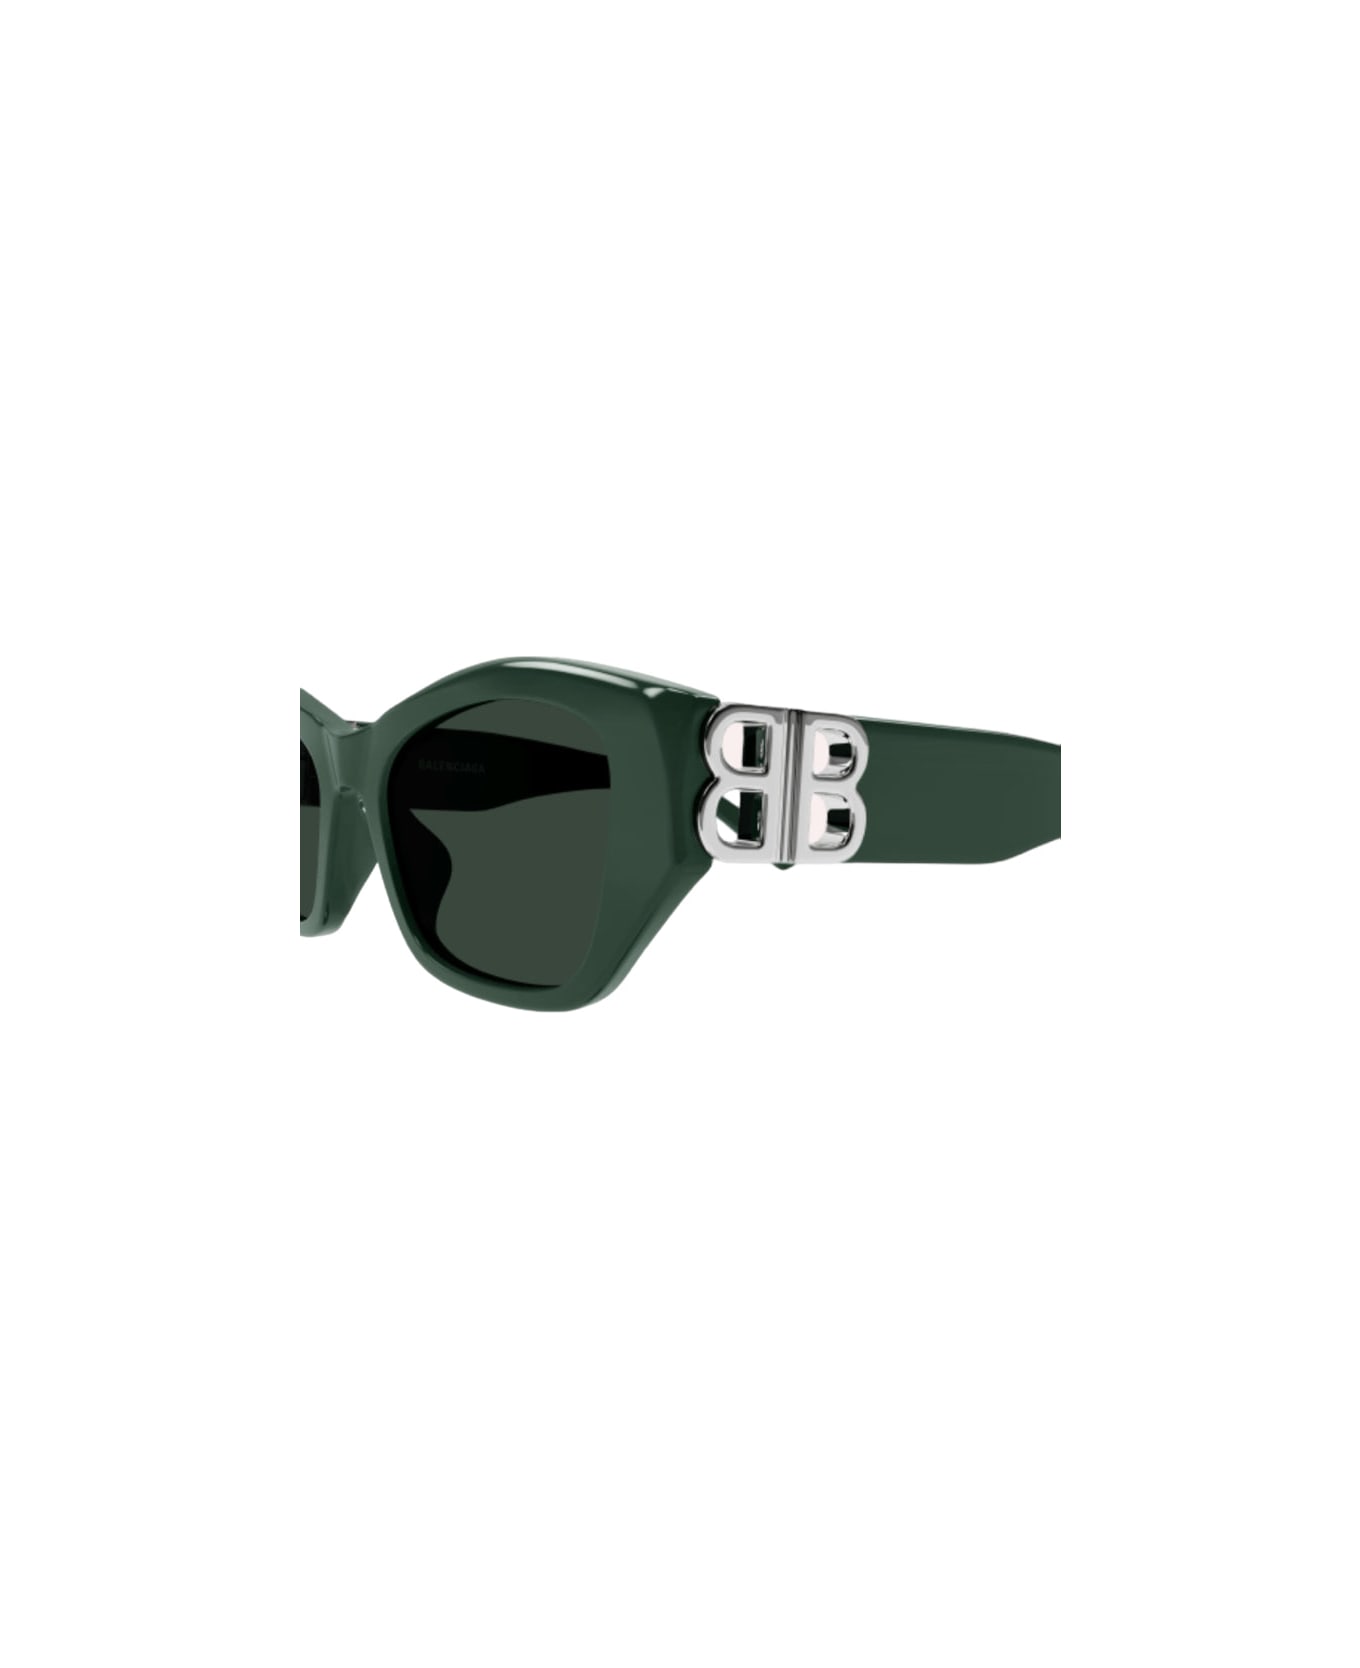 Balenciaga Eyewear Bb 0311 - Green Sunglasses